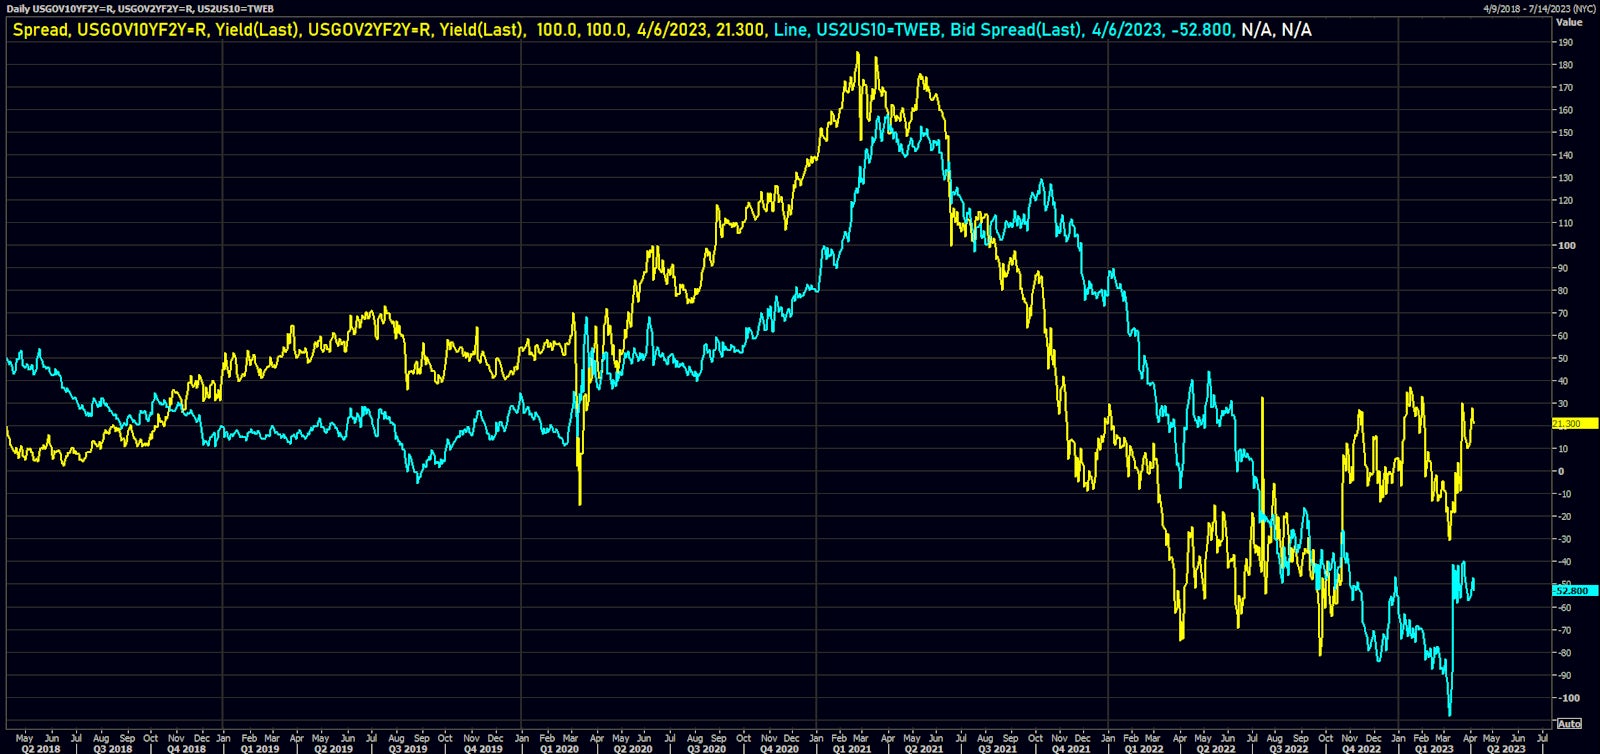 US Treasuries 2s10s Spread: Spot vs 2Y forward | Source: Refinitiv